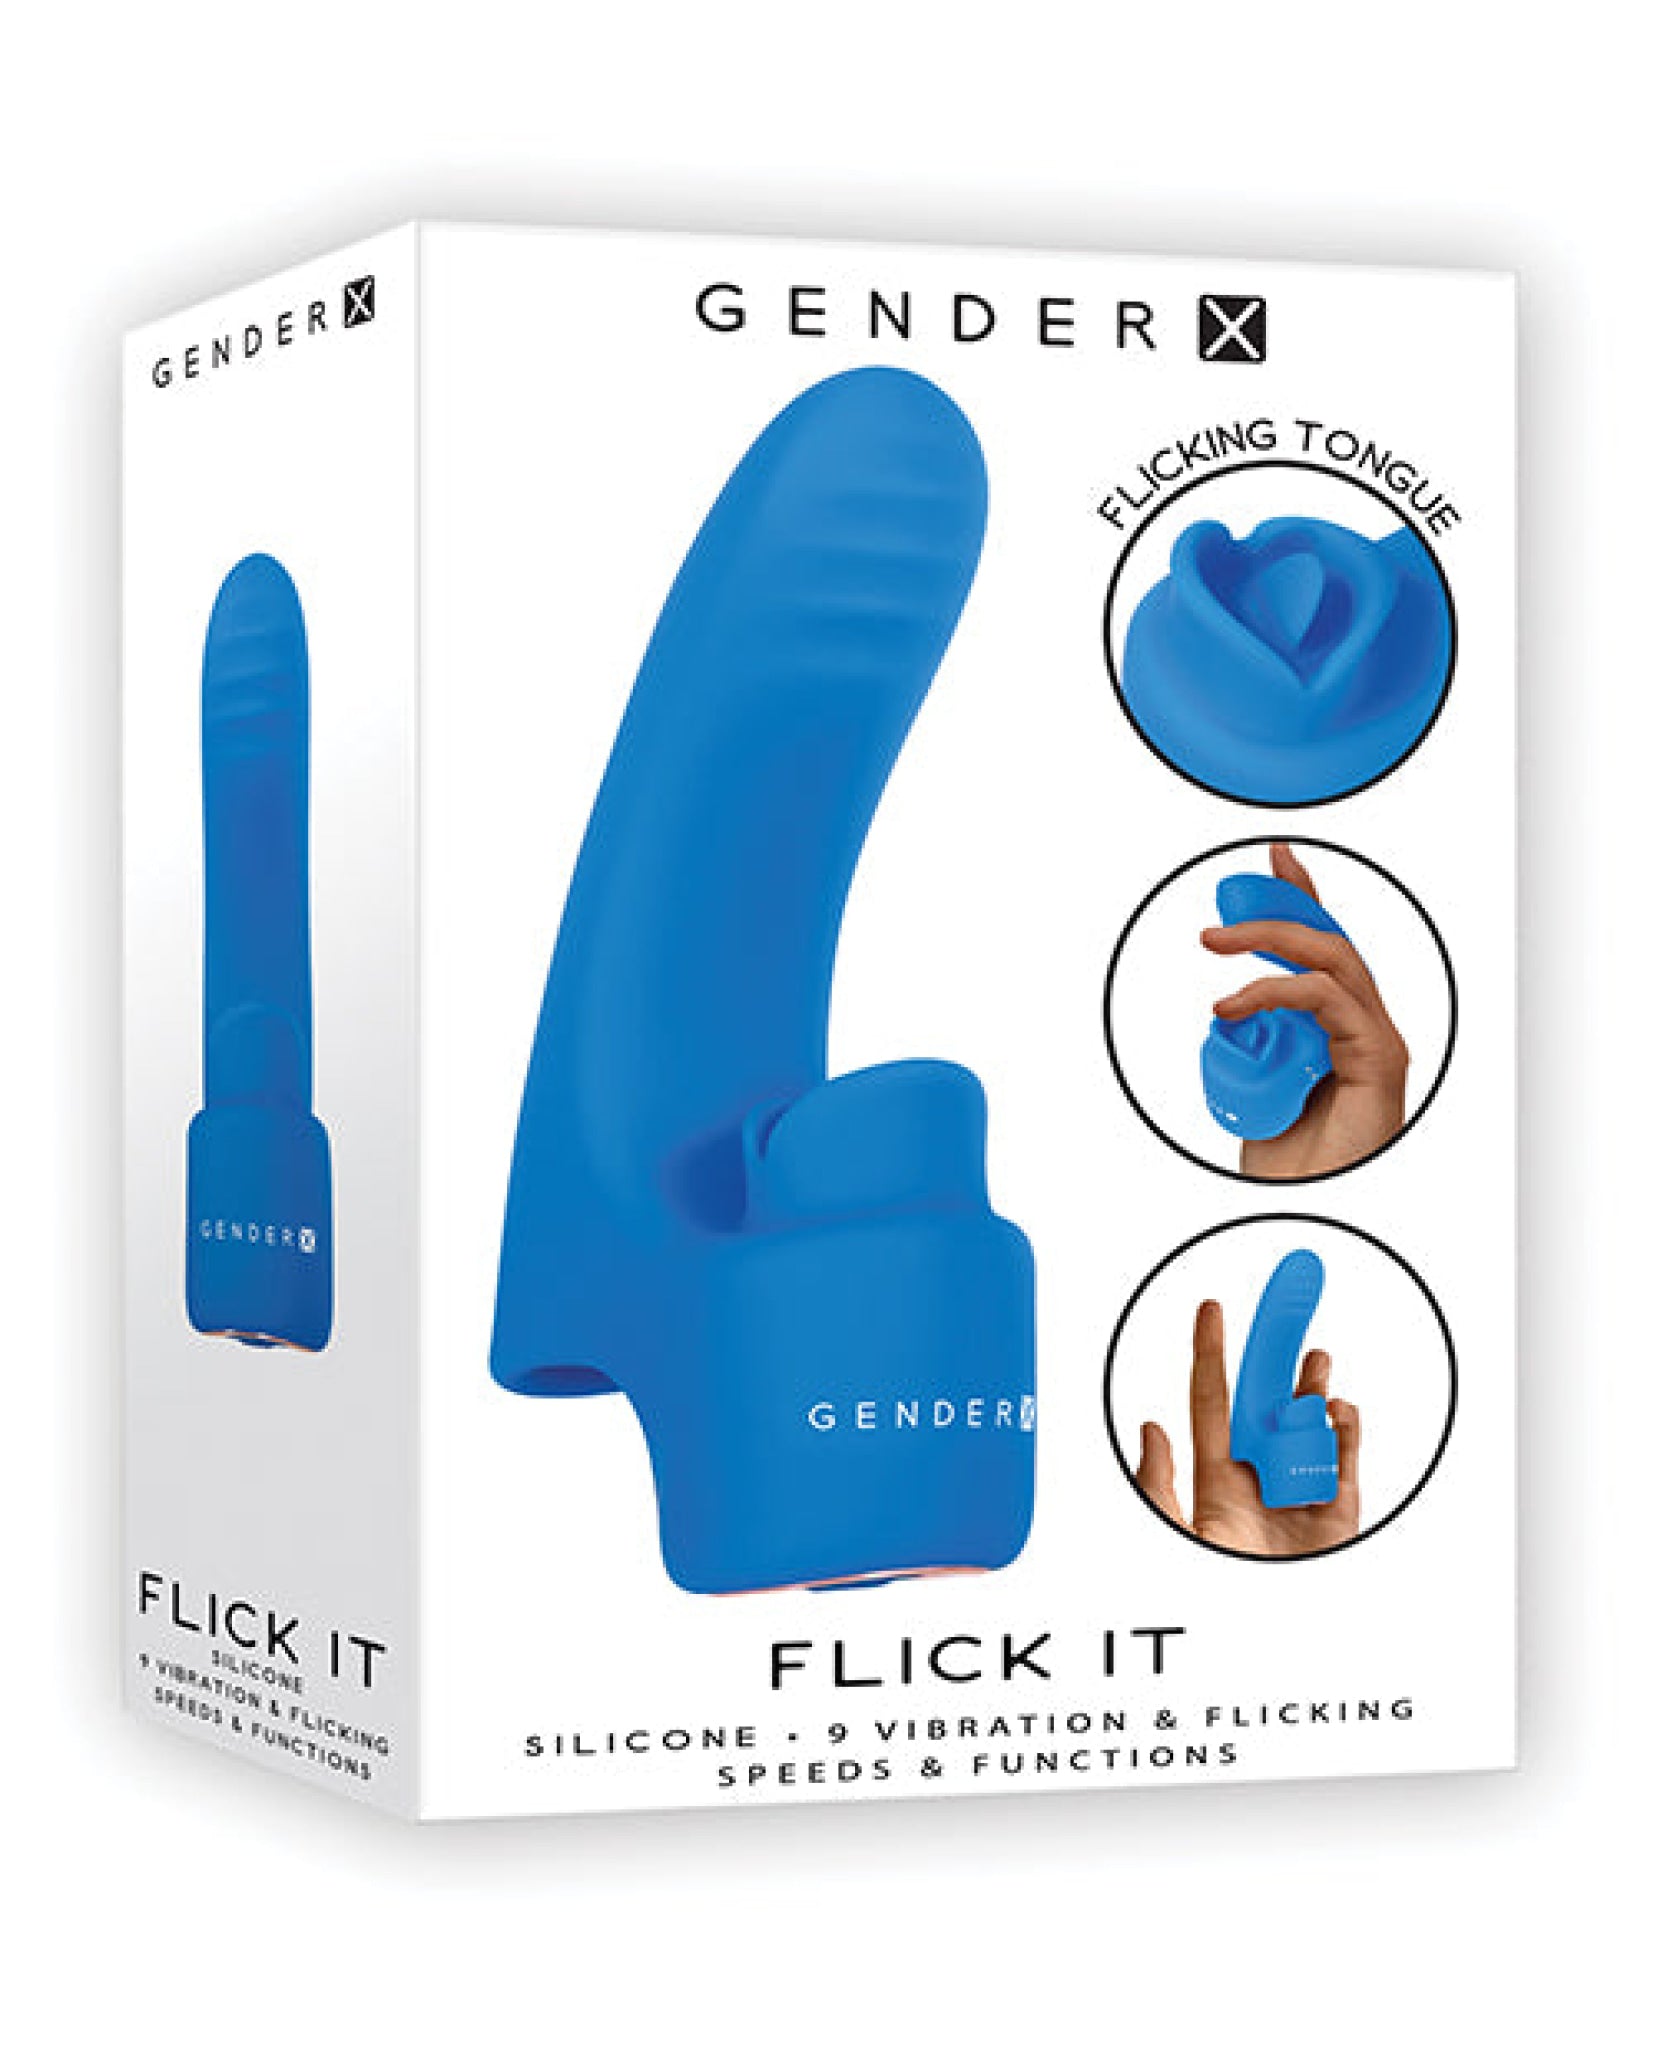 Gender X Flick It - Blue Gender X